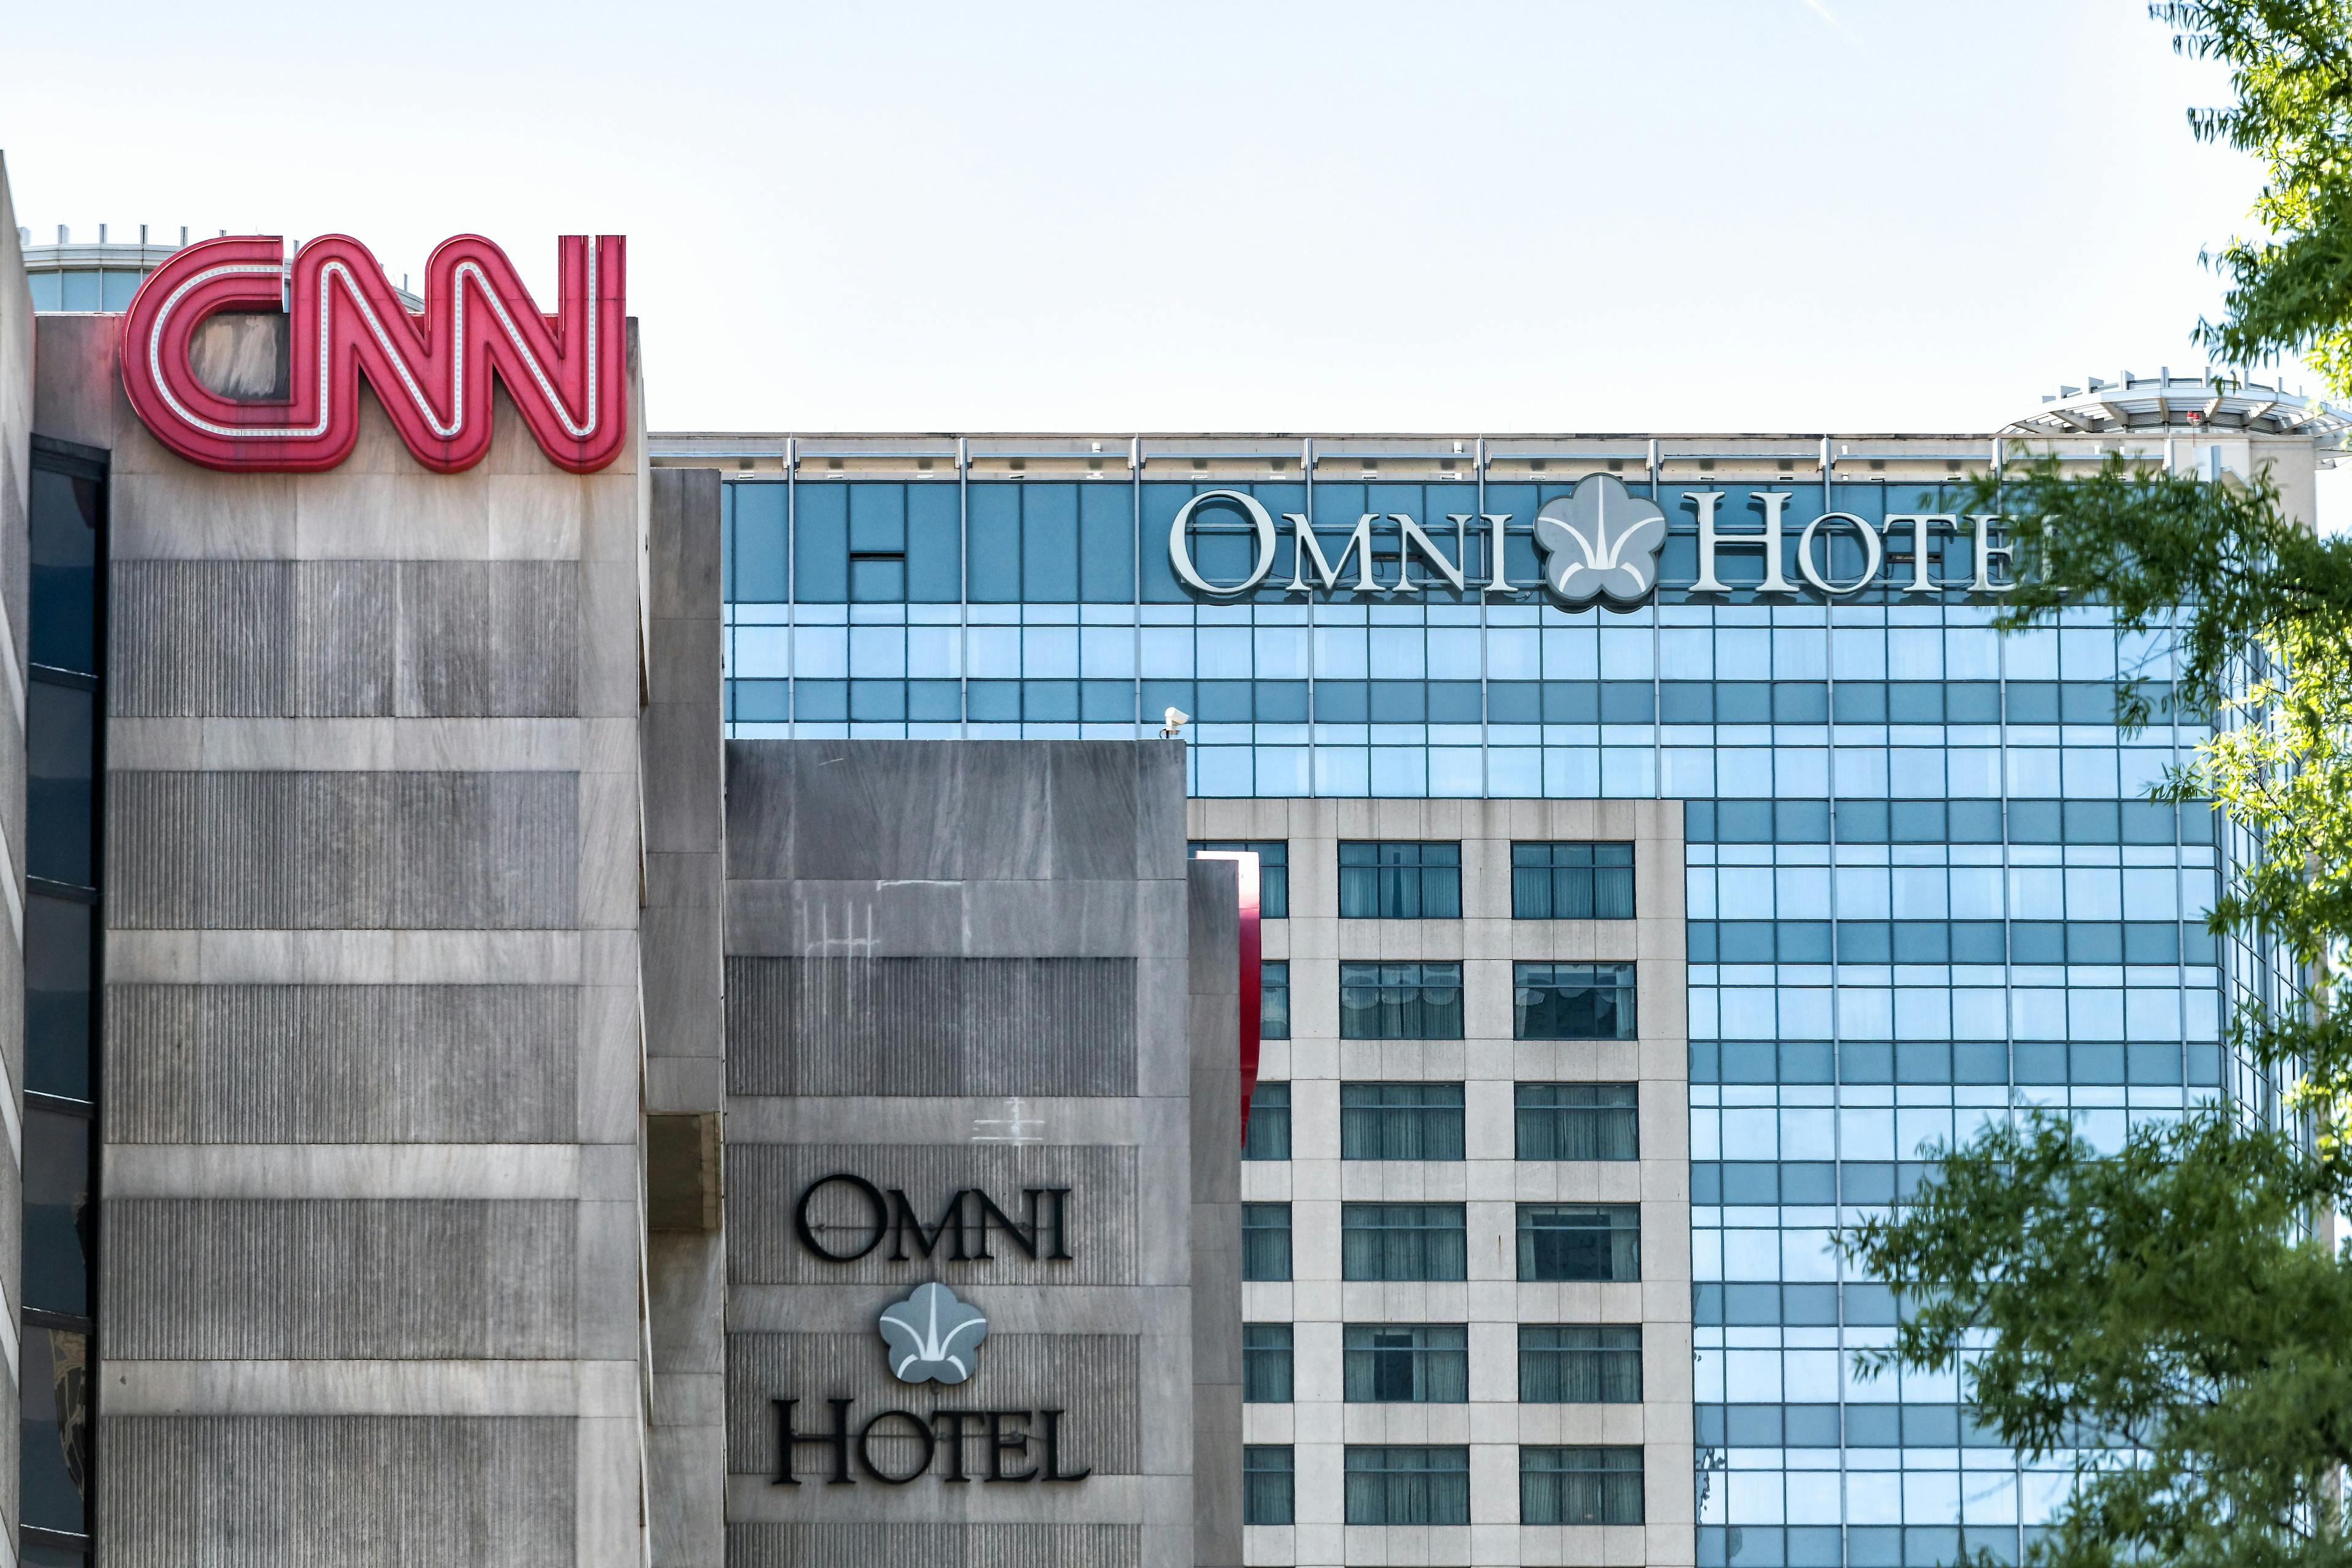 OMNI hotel at CNN center